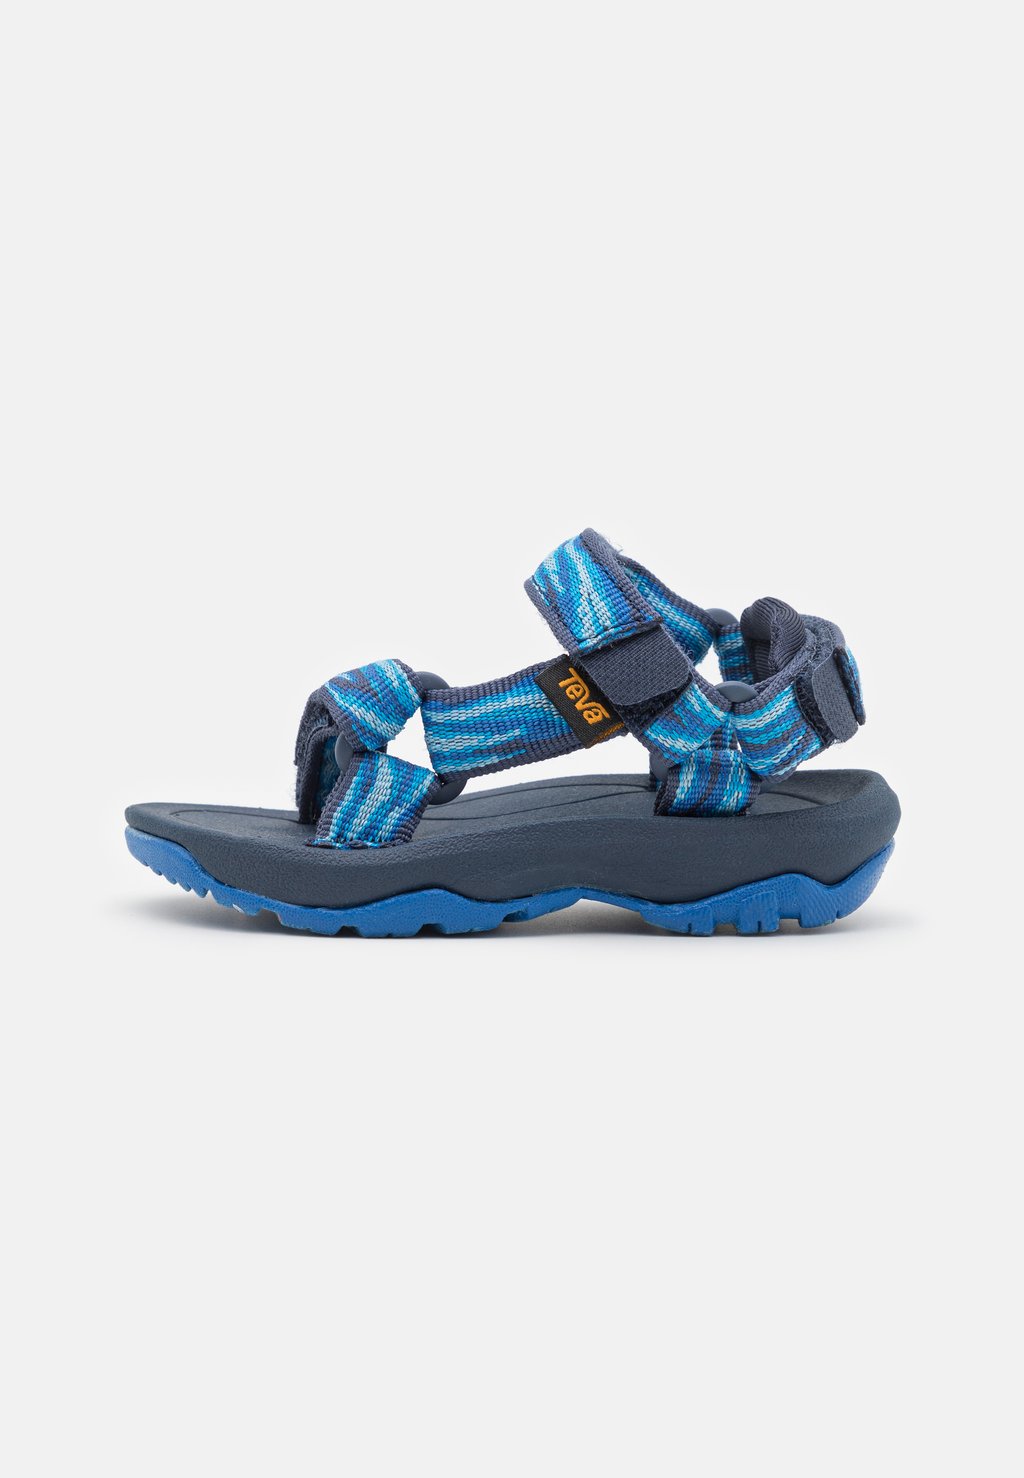 Трекинговые сандалии HURRICANE XLT 2 UNISEX Teva, цвет blue